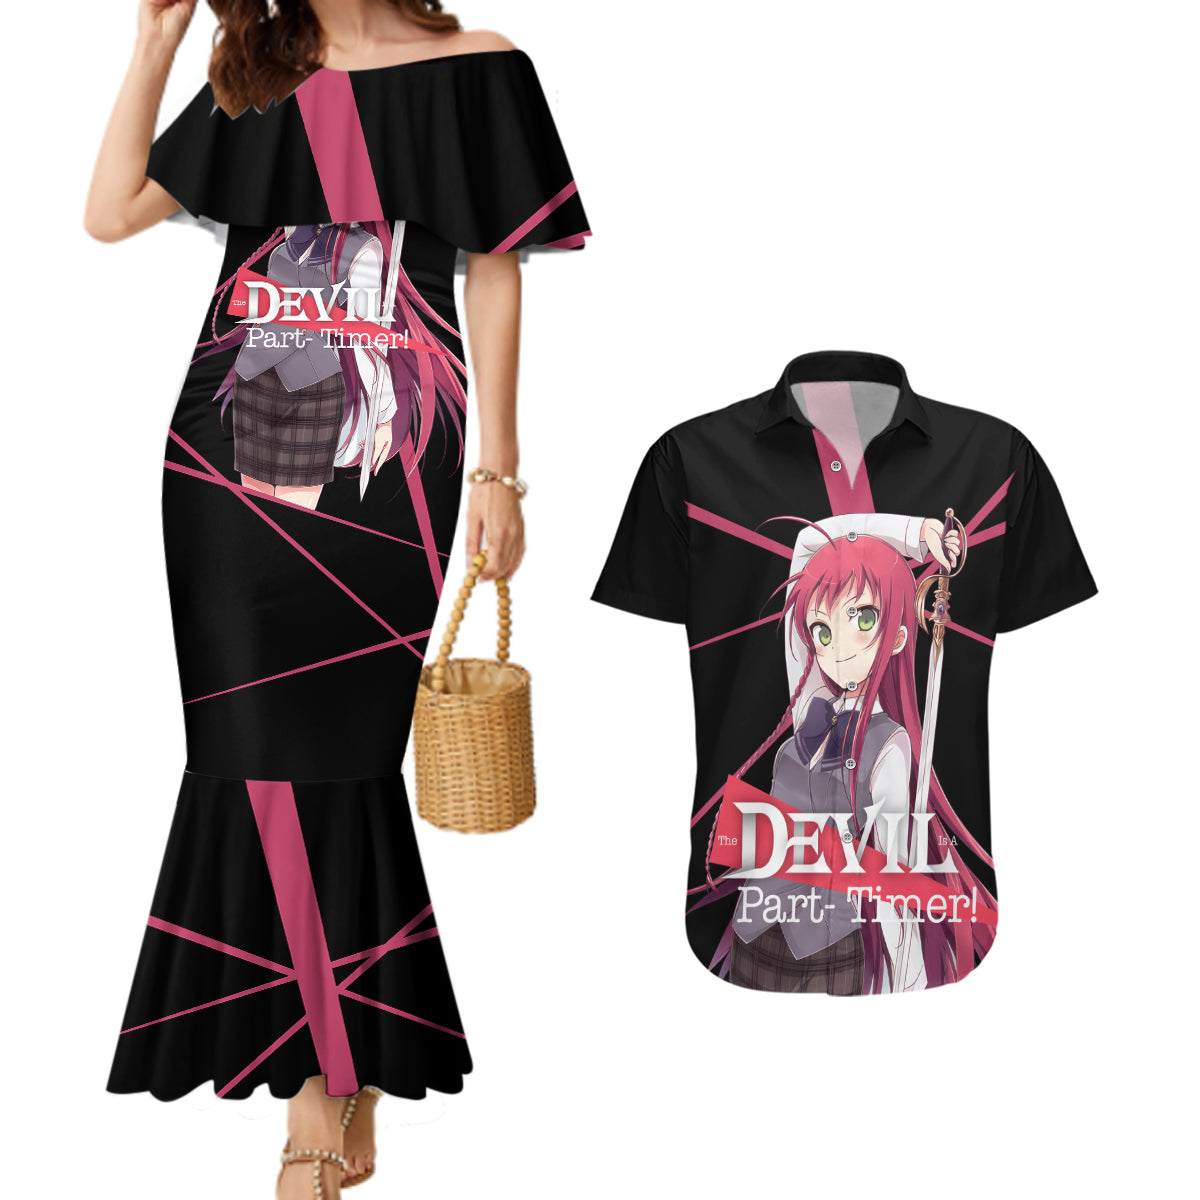 Emi Yusa The Devil Part Timer Couples Matching Mermaid Dress and Hawaiian Shirt Anime Style